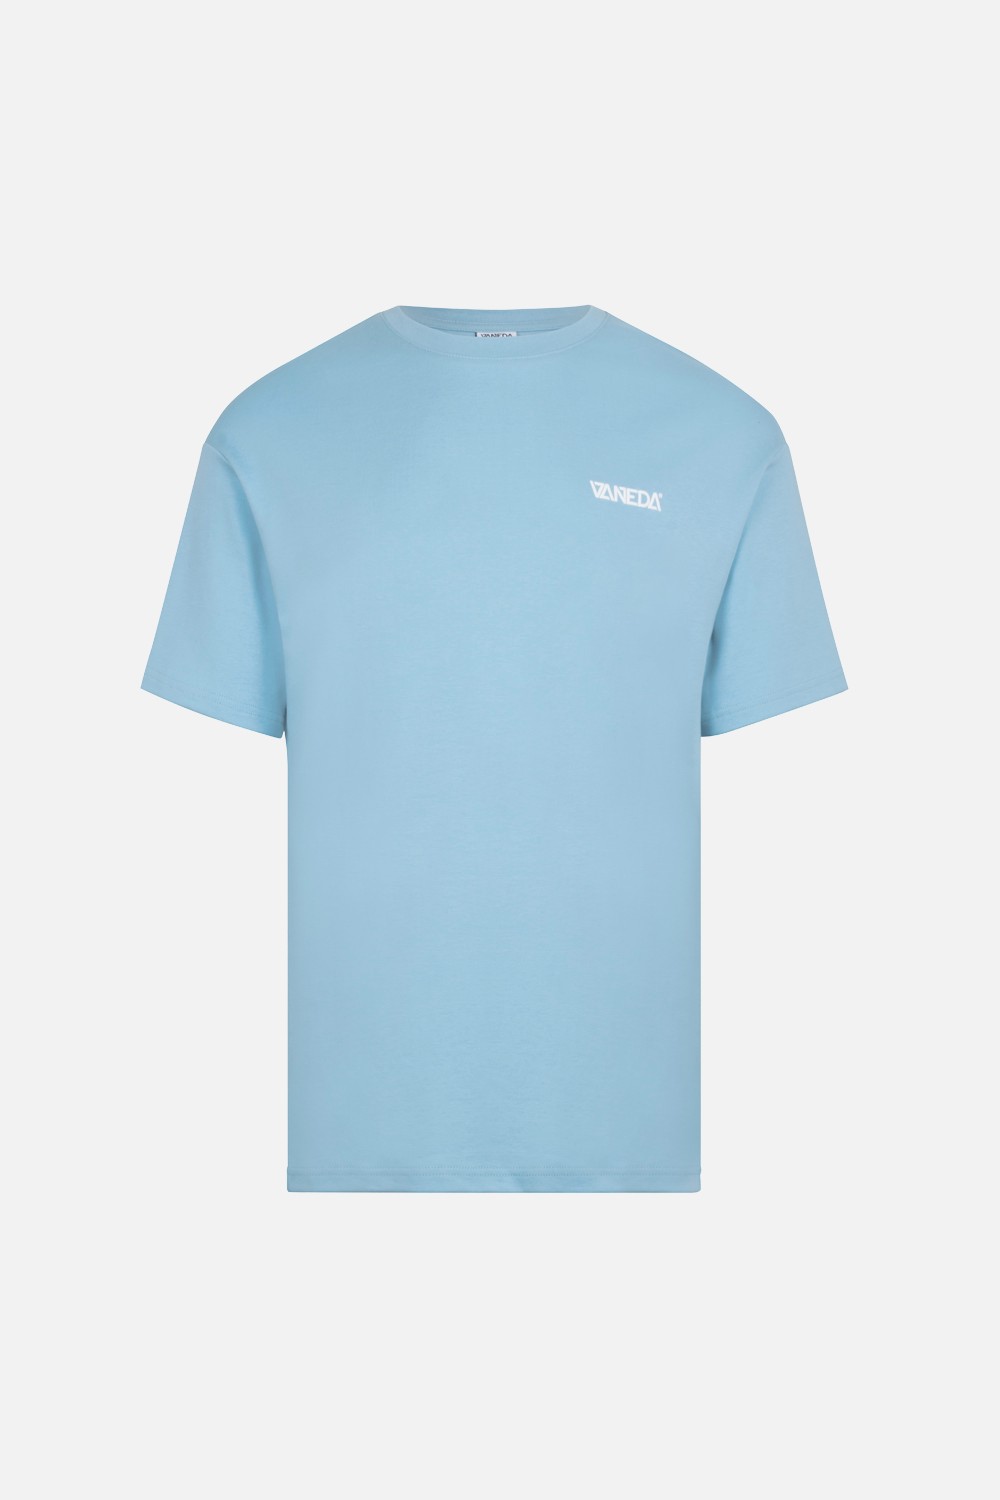 Oversized Fit Vaneda Logo Basic Tshirt Mavi